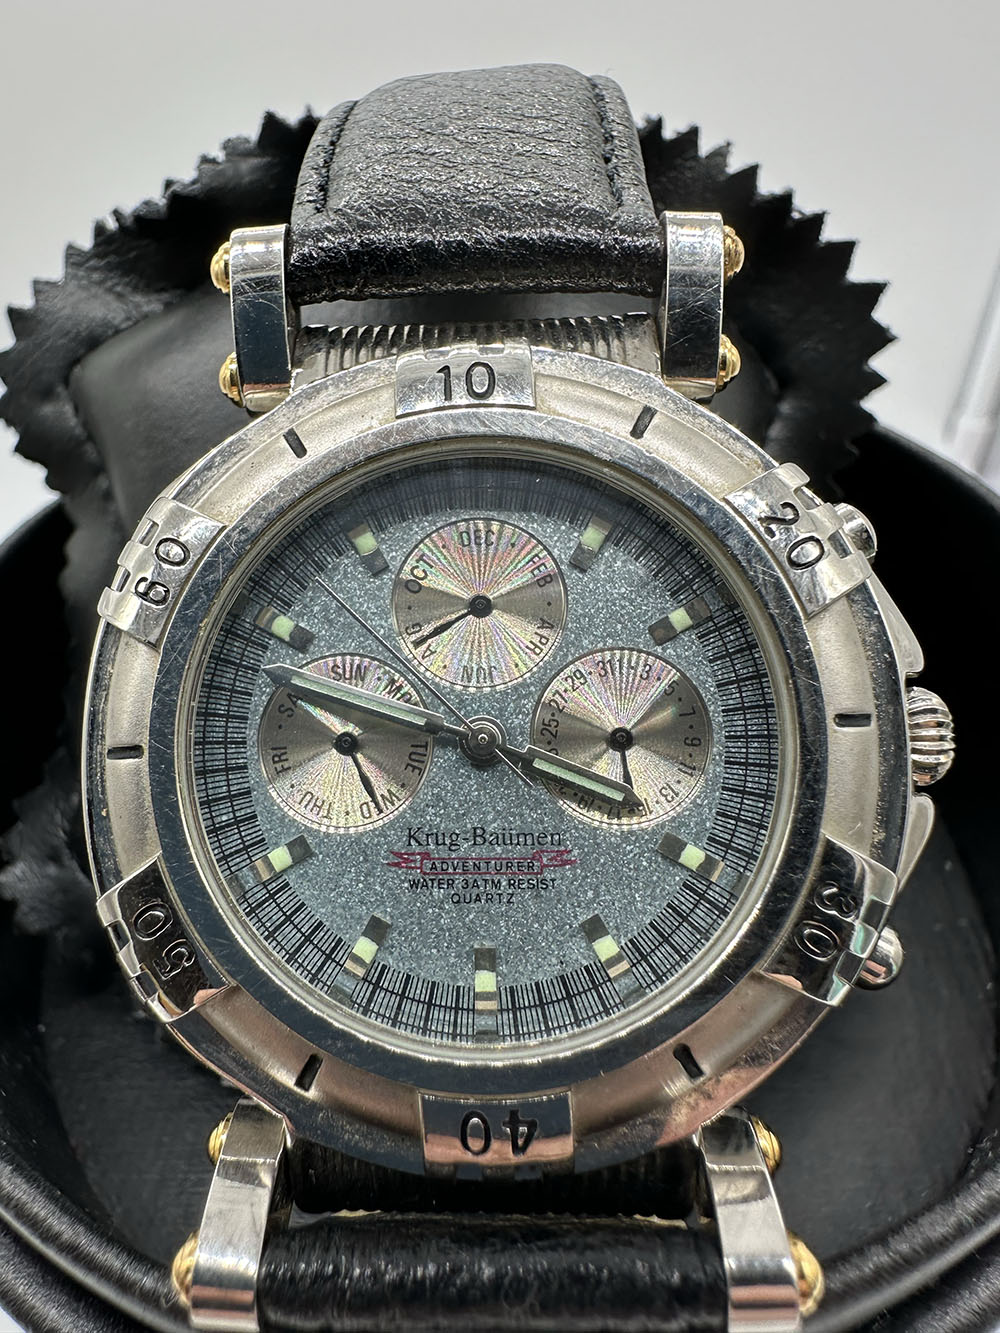 A Krug-Baumen cronograph quarts watch